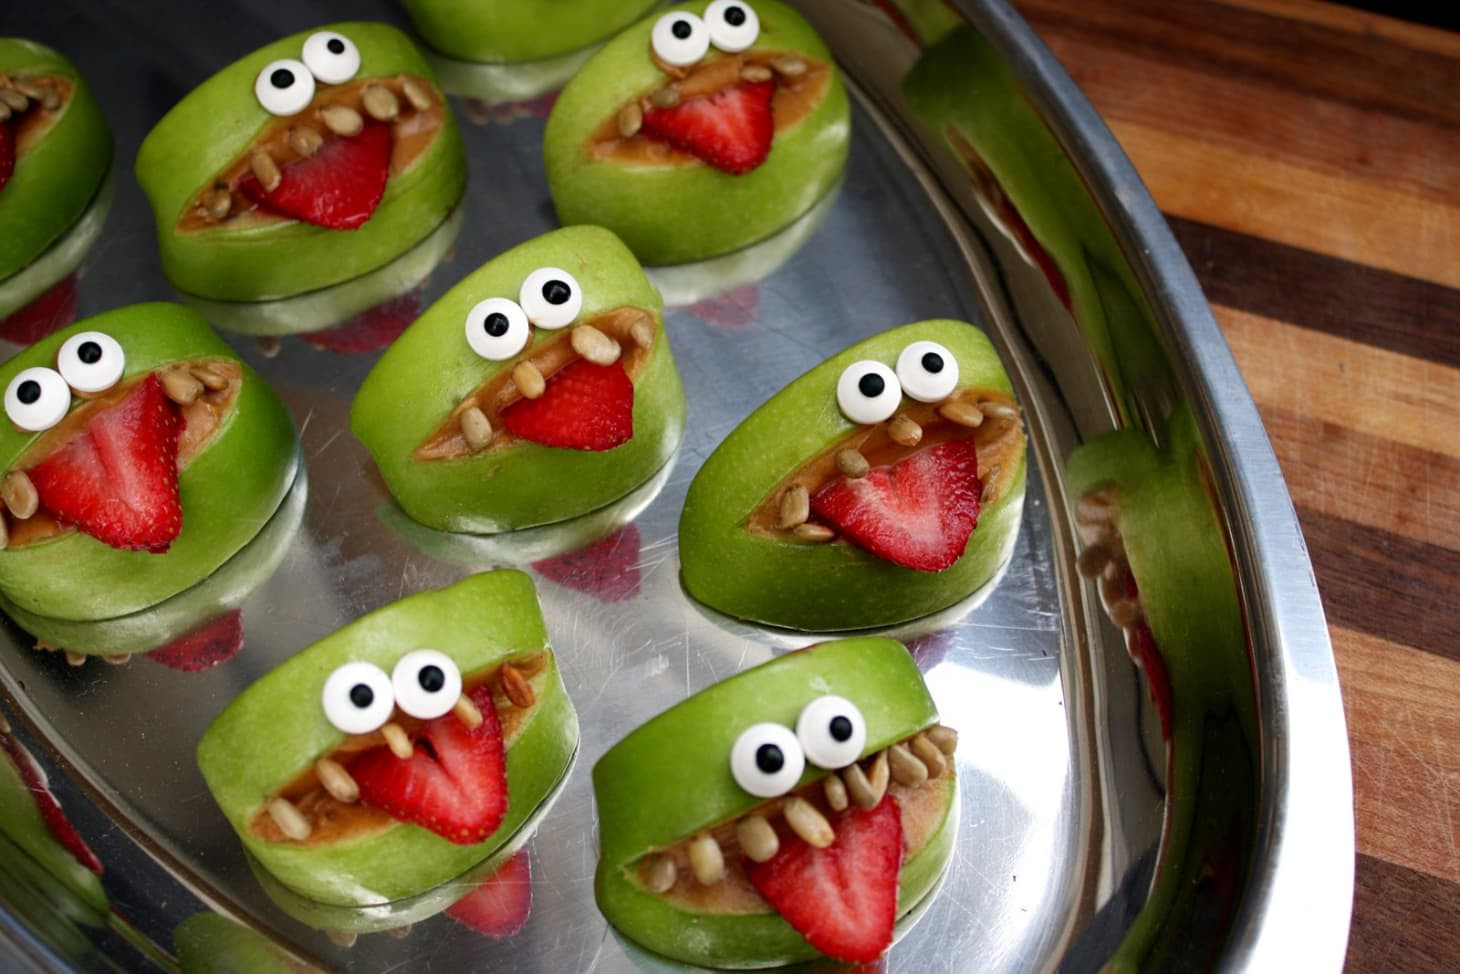 Pinterest Halloween Desserts
 We Tried 7 Popular Halloween Recipes from Pinterest So